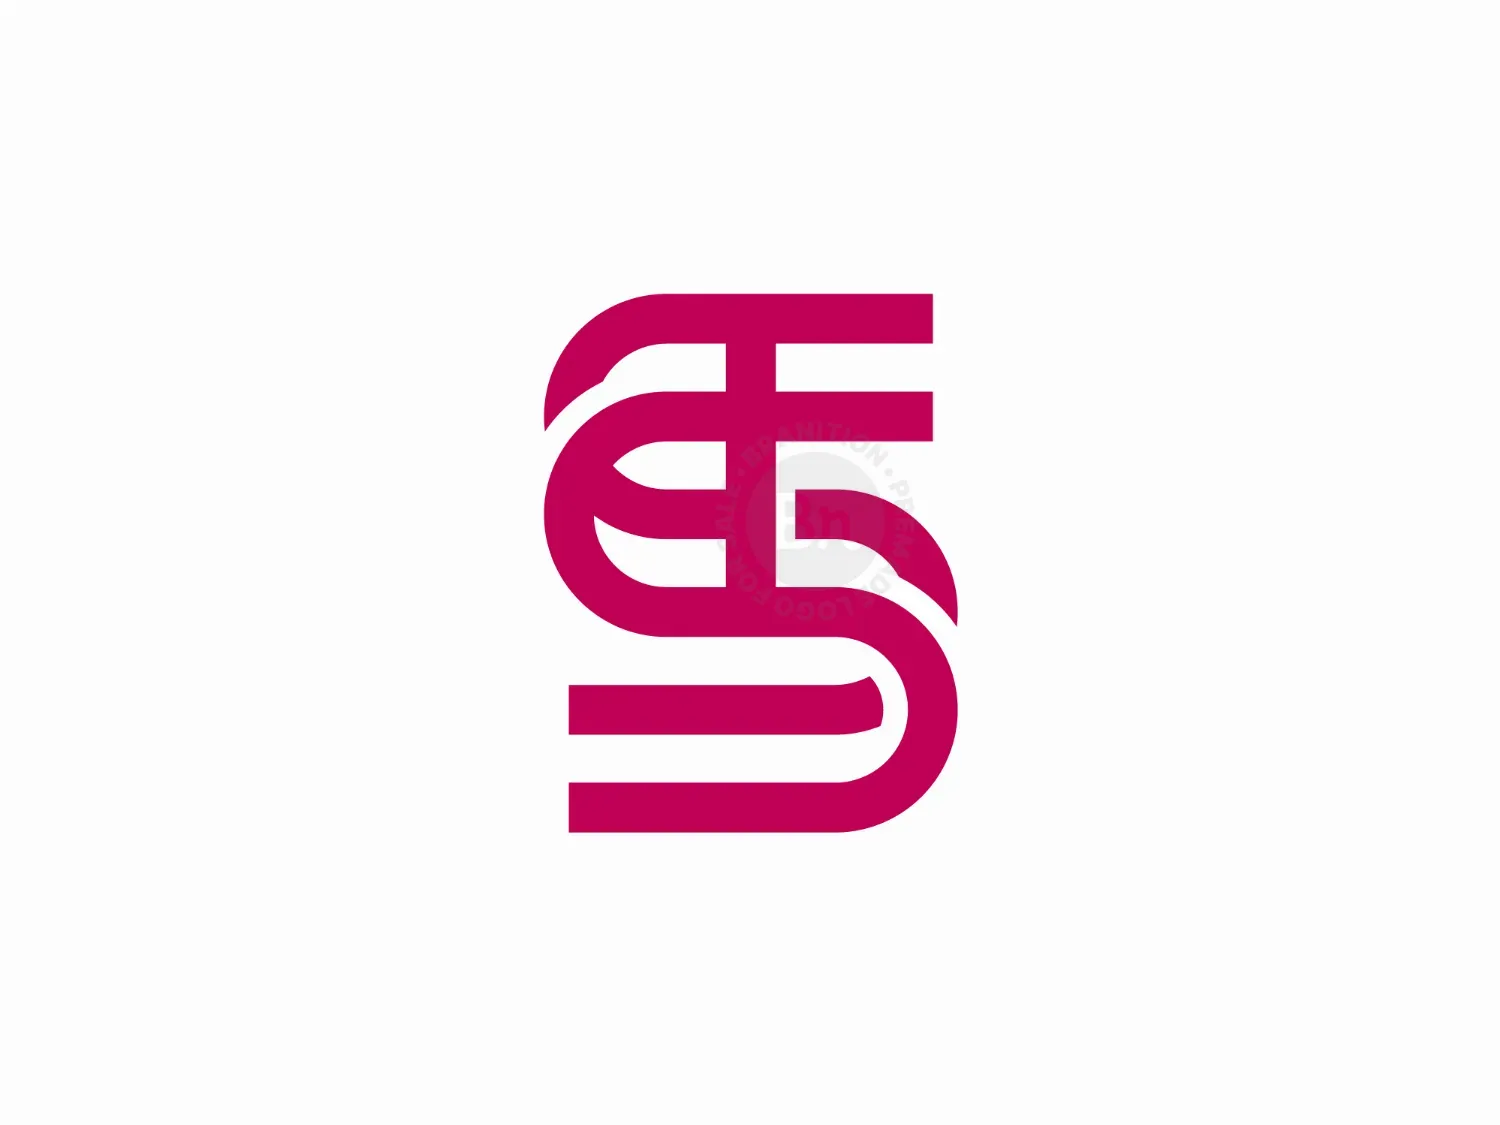 Monogram Sf Or St Logo